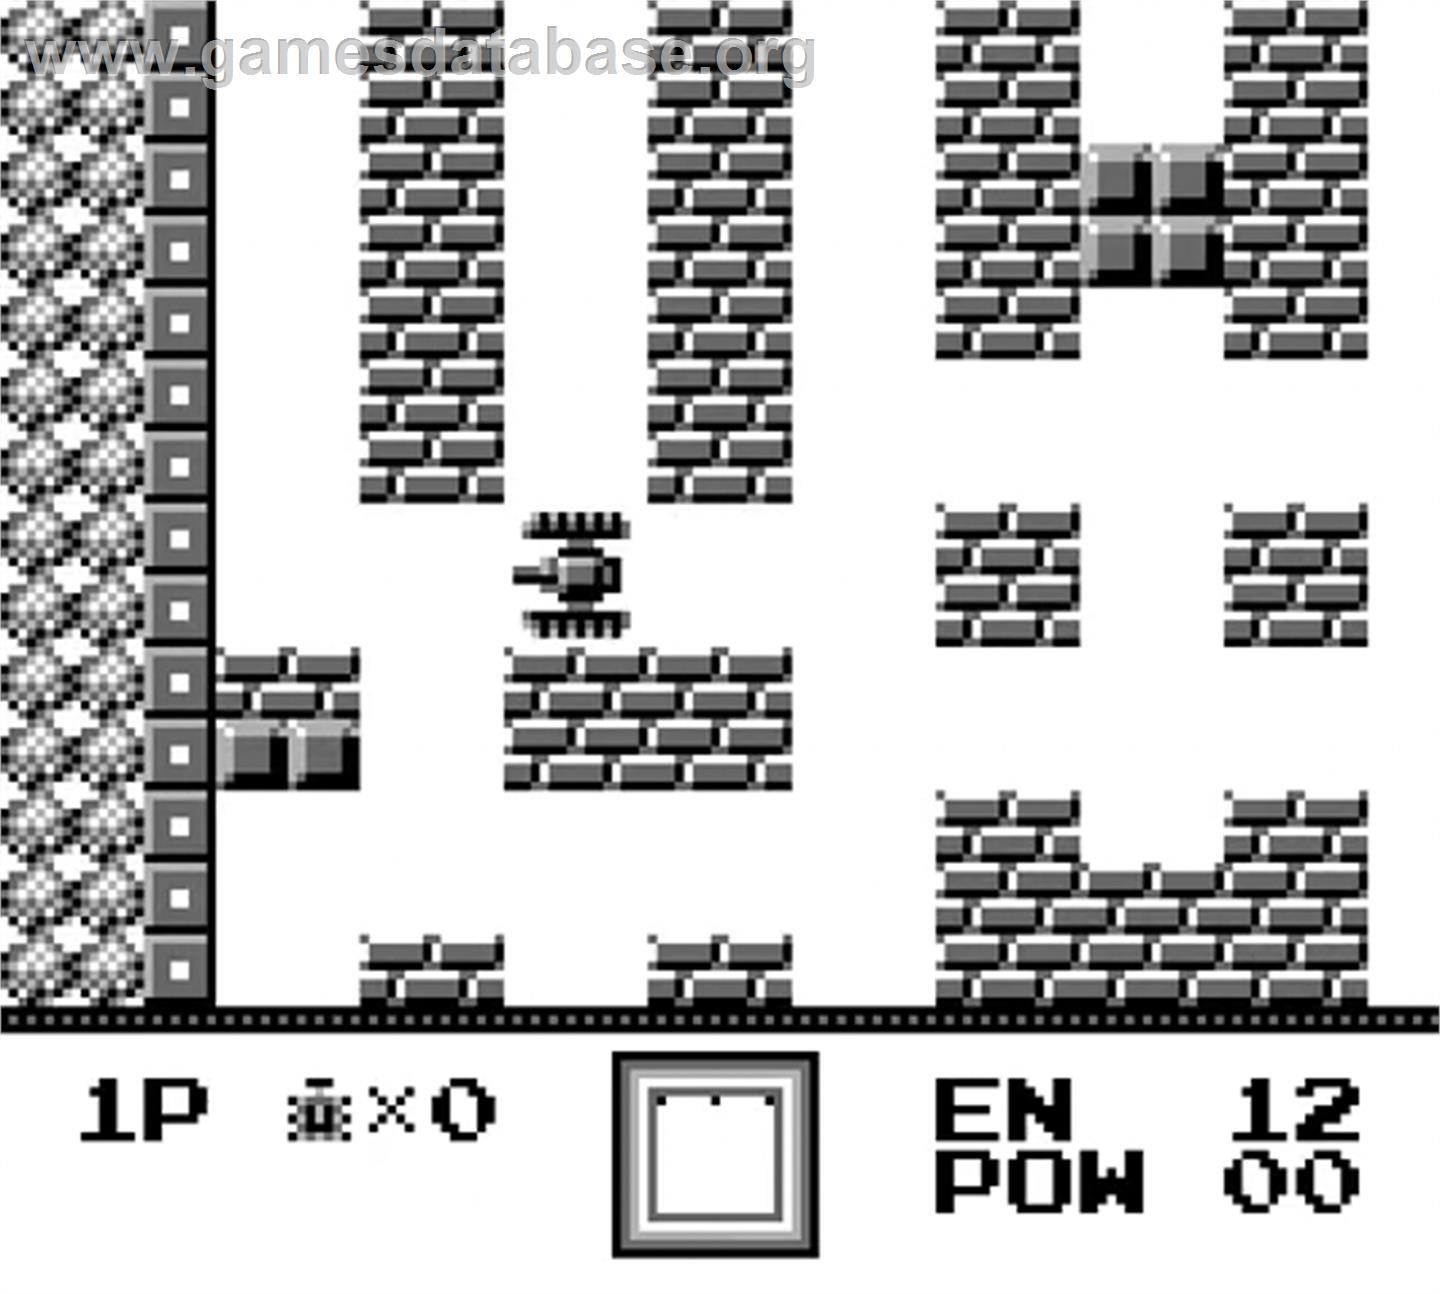 Battle City - Nintendo Game Boy - Artwork - In Game